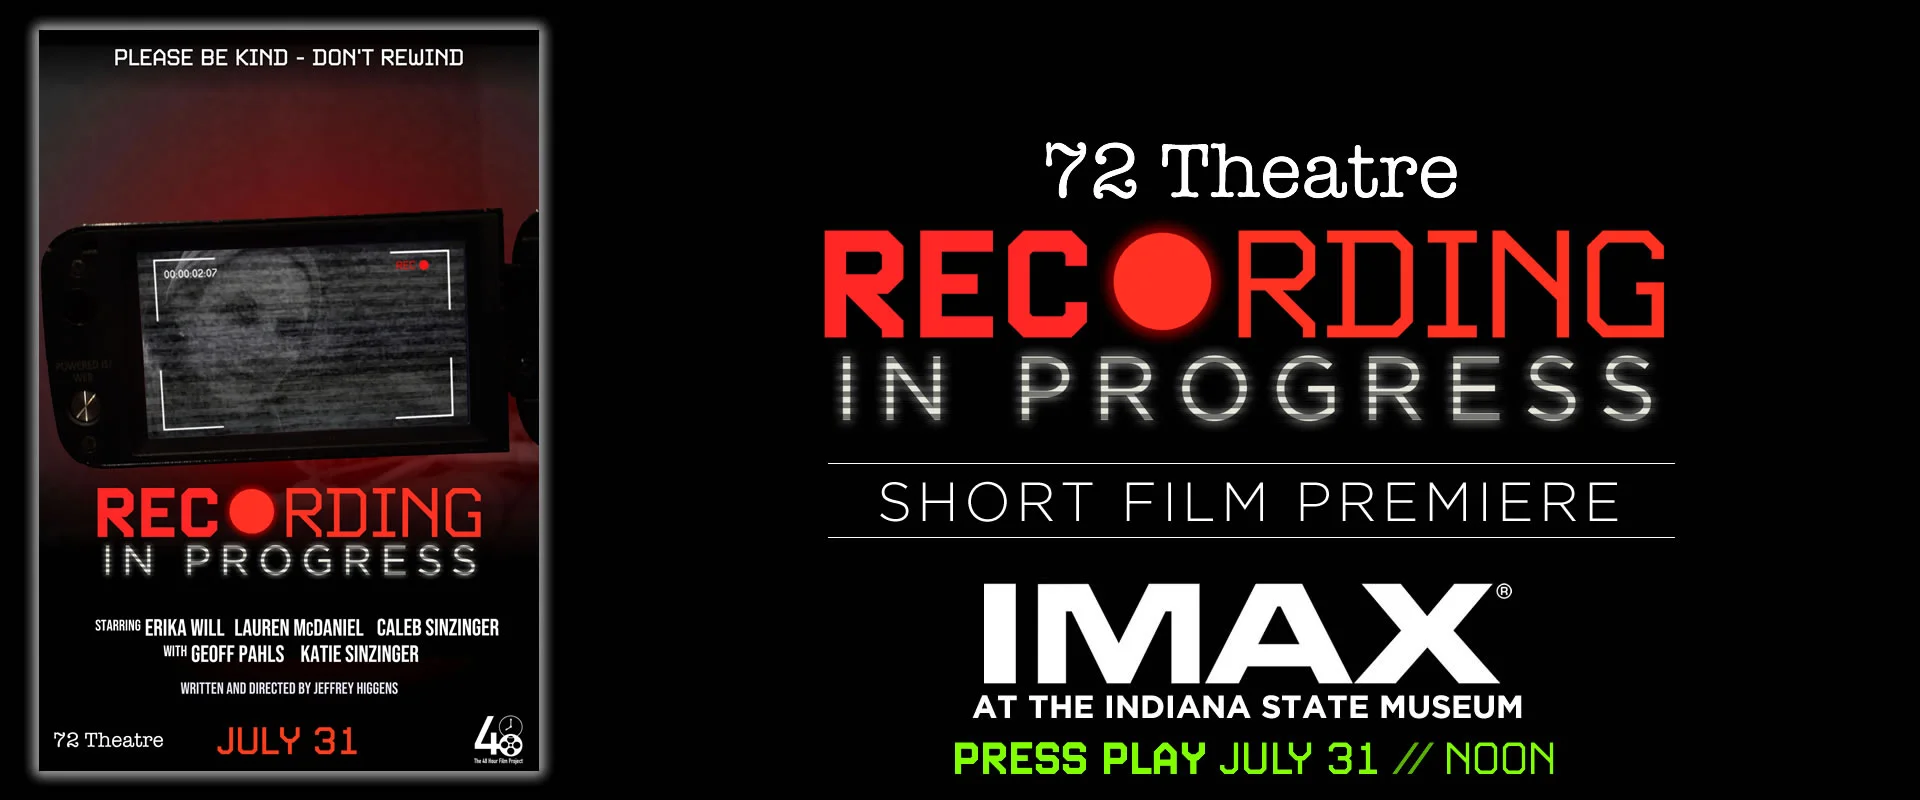 72 Theatre's "Recording in Progress" to premiere at the IMAX theatre in Indianapolis